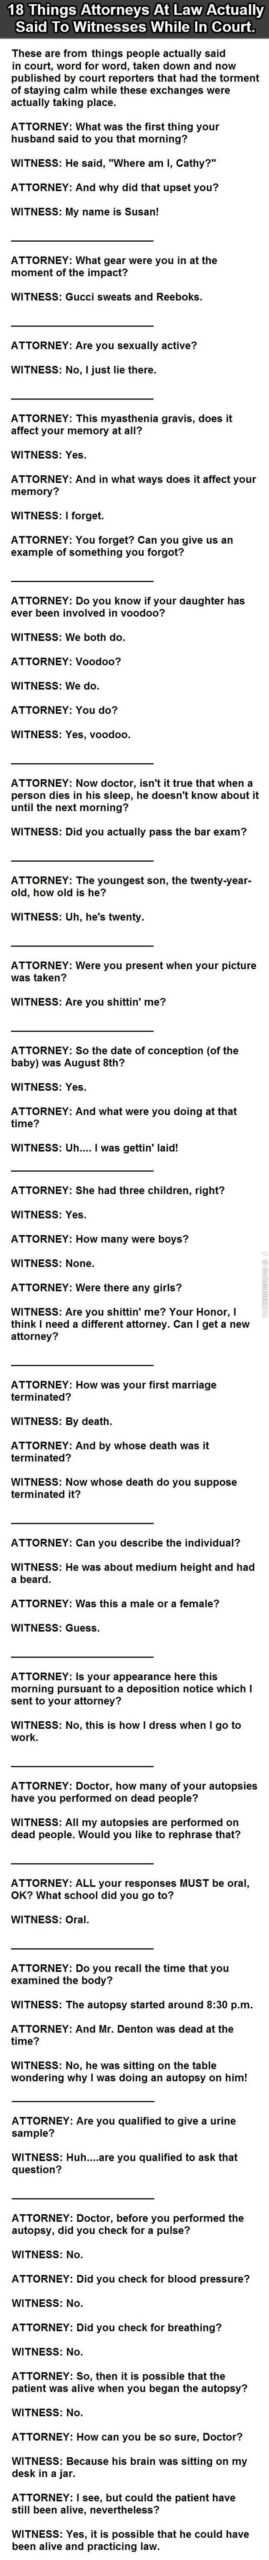 Lawyers.